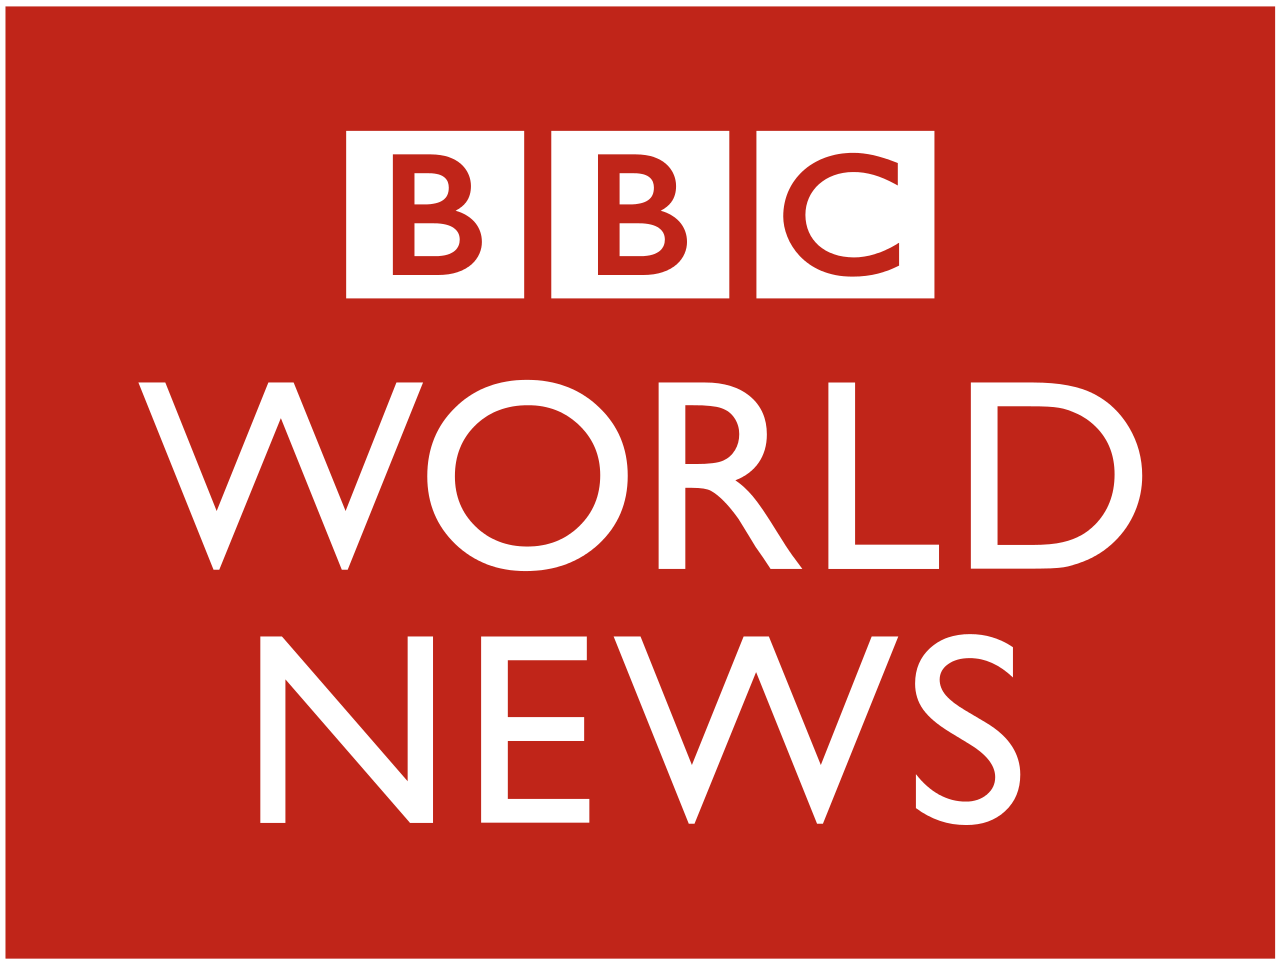 BBC News Logo - BBC world news logo